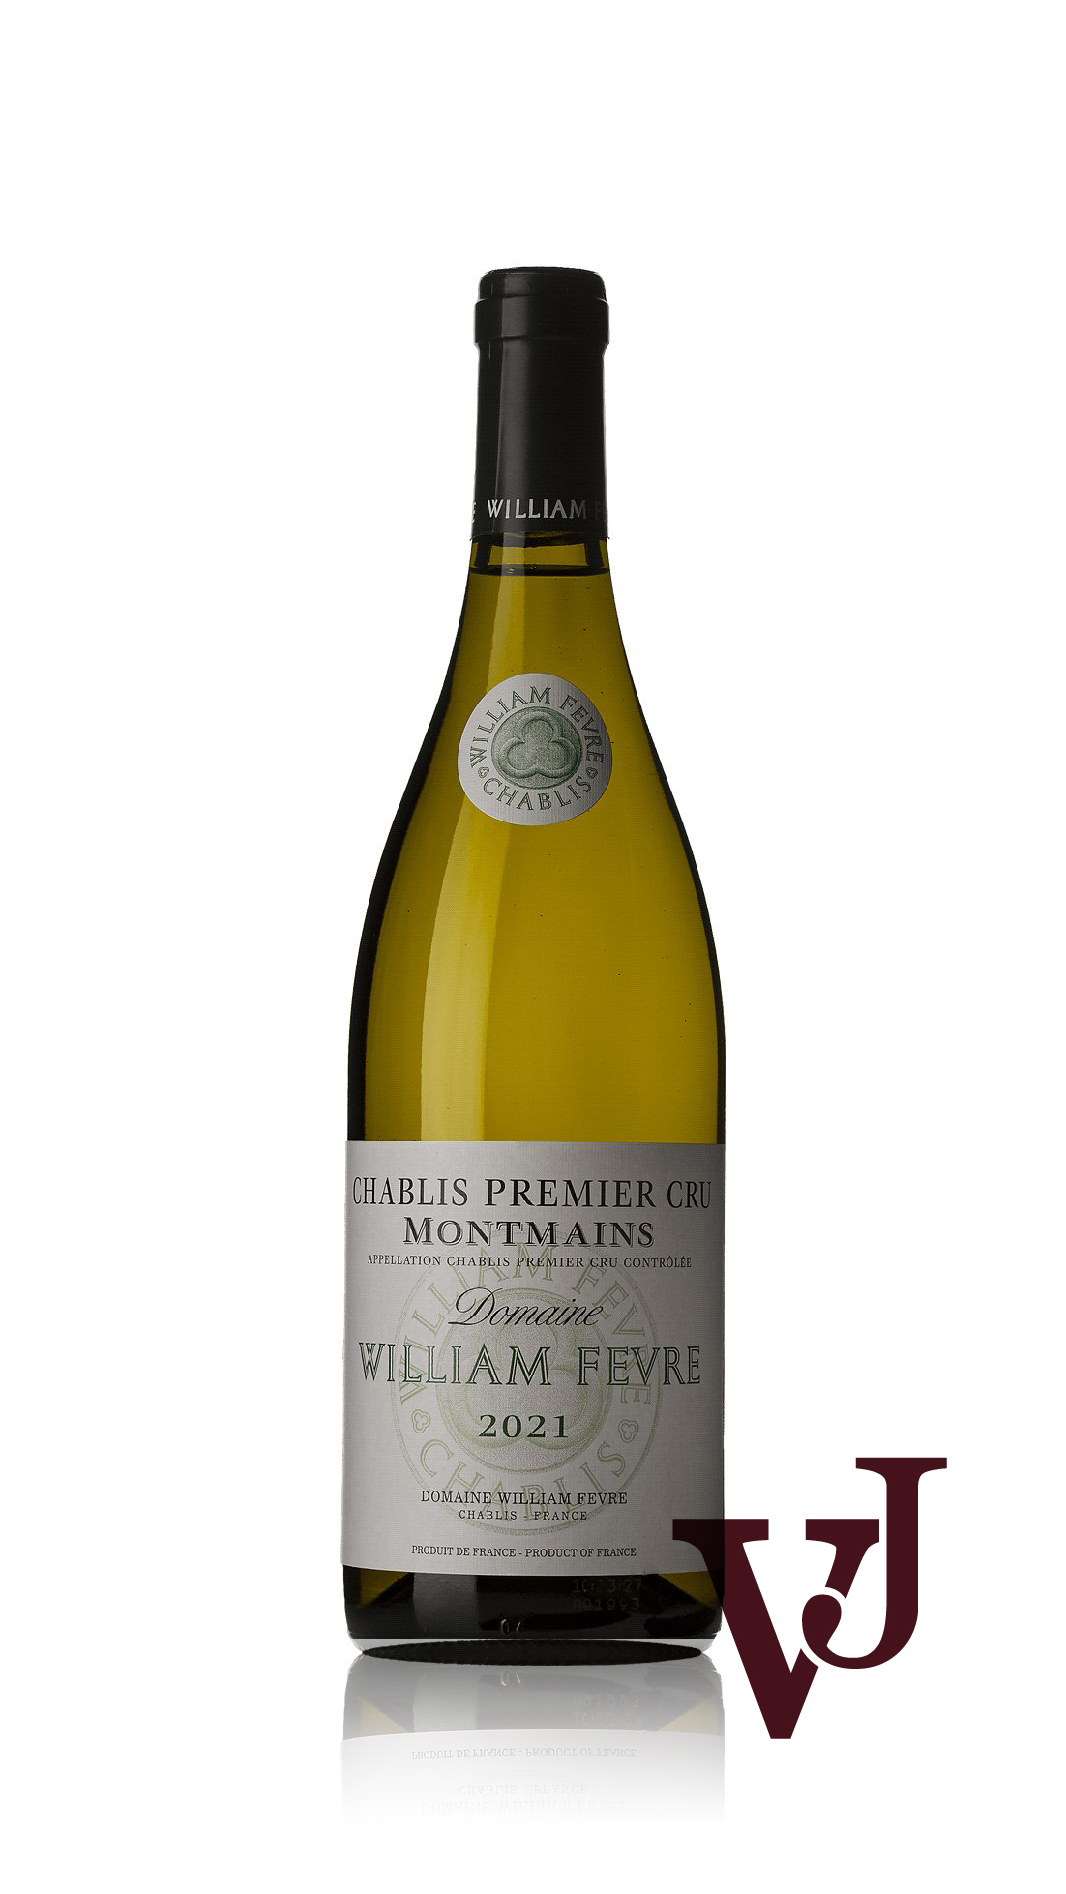 Vitt Vin - Chablis Premier Cru Montmains William Fèvre 2021 artikel nummer 9509801 från producenten Domaine William Fèvre från området Frankrike